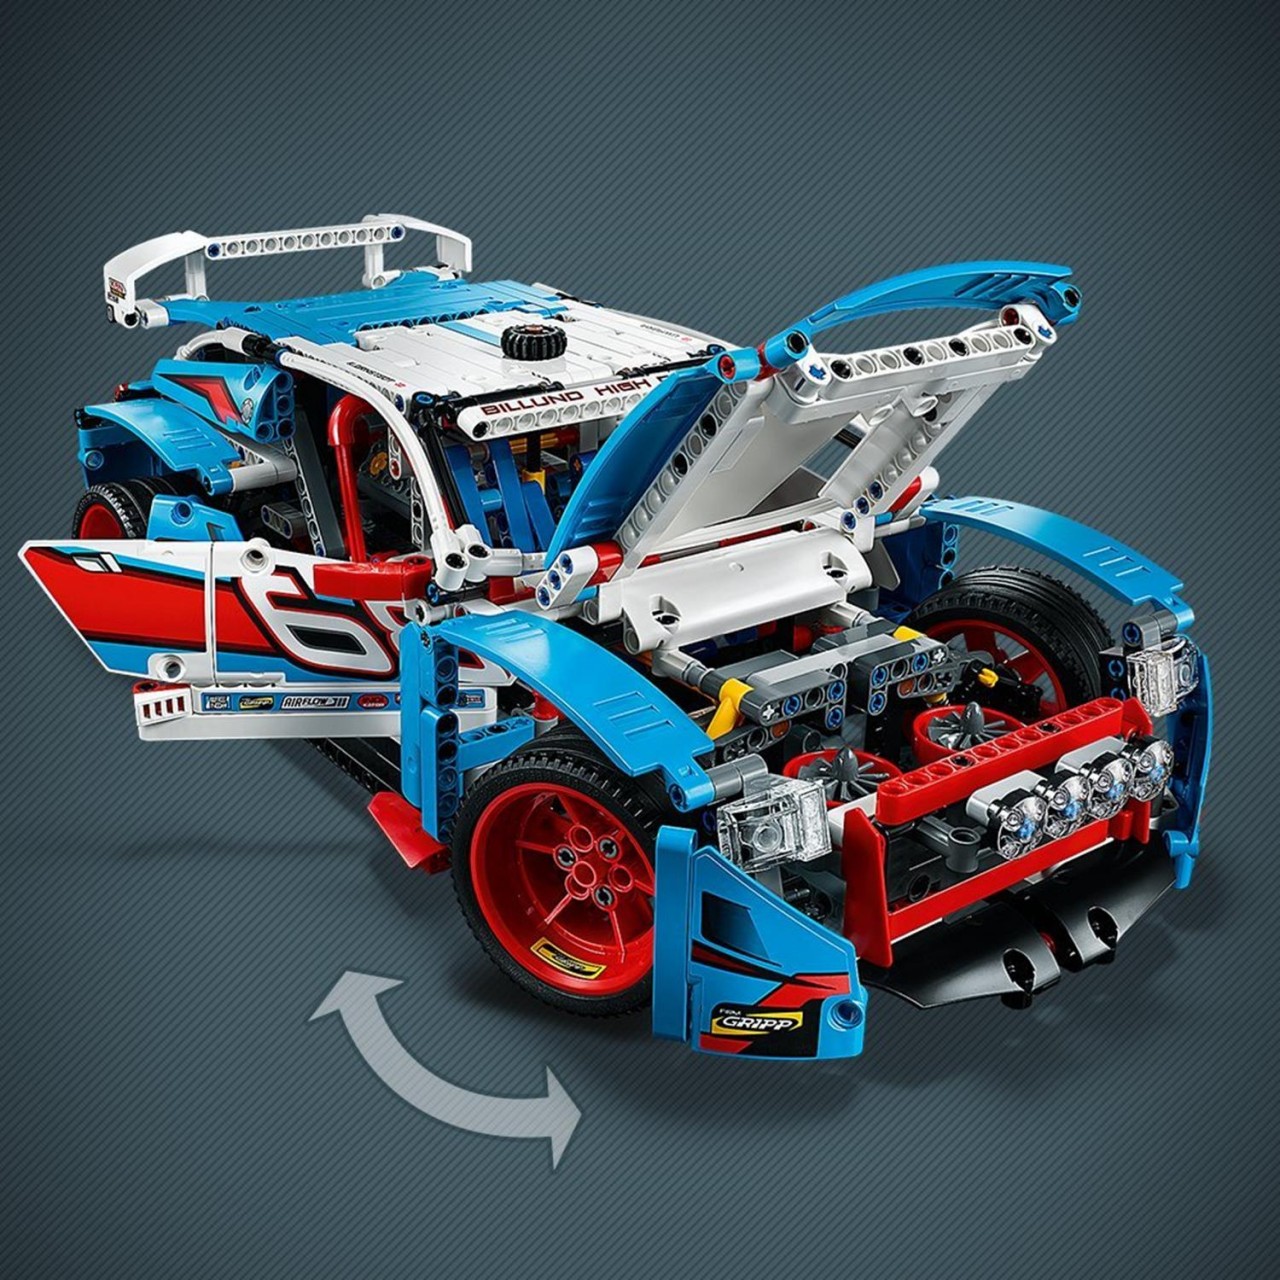 LEGO TECHNIC 42077 Rallyeauto